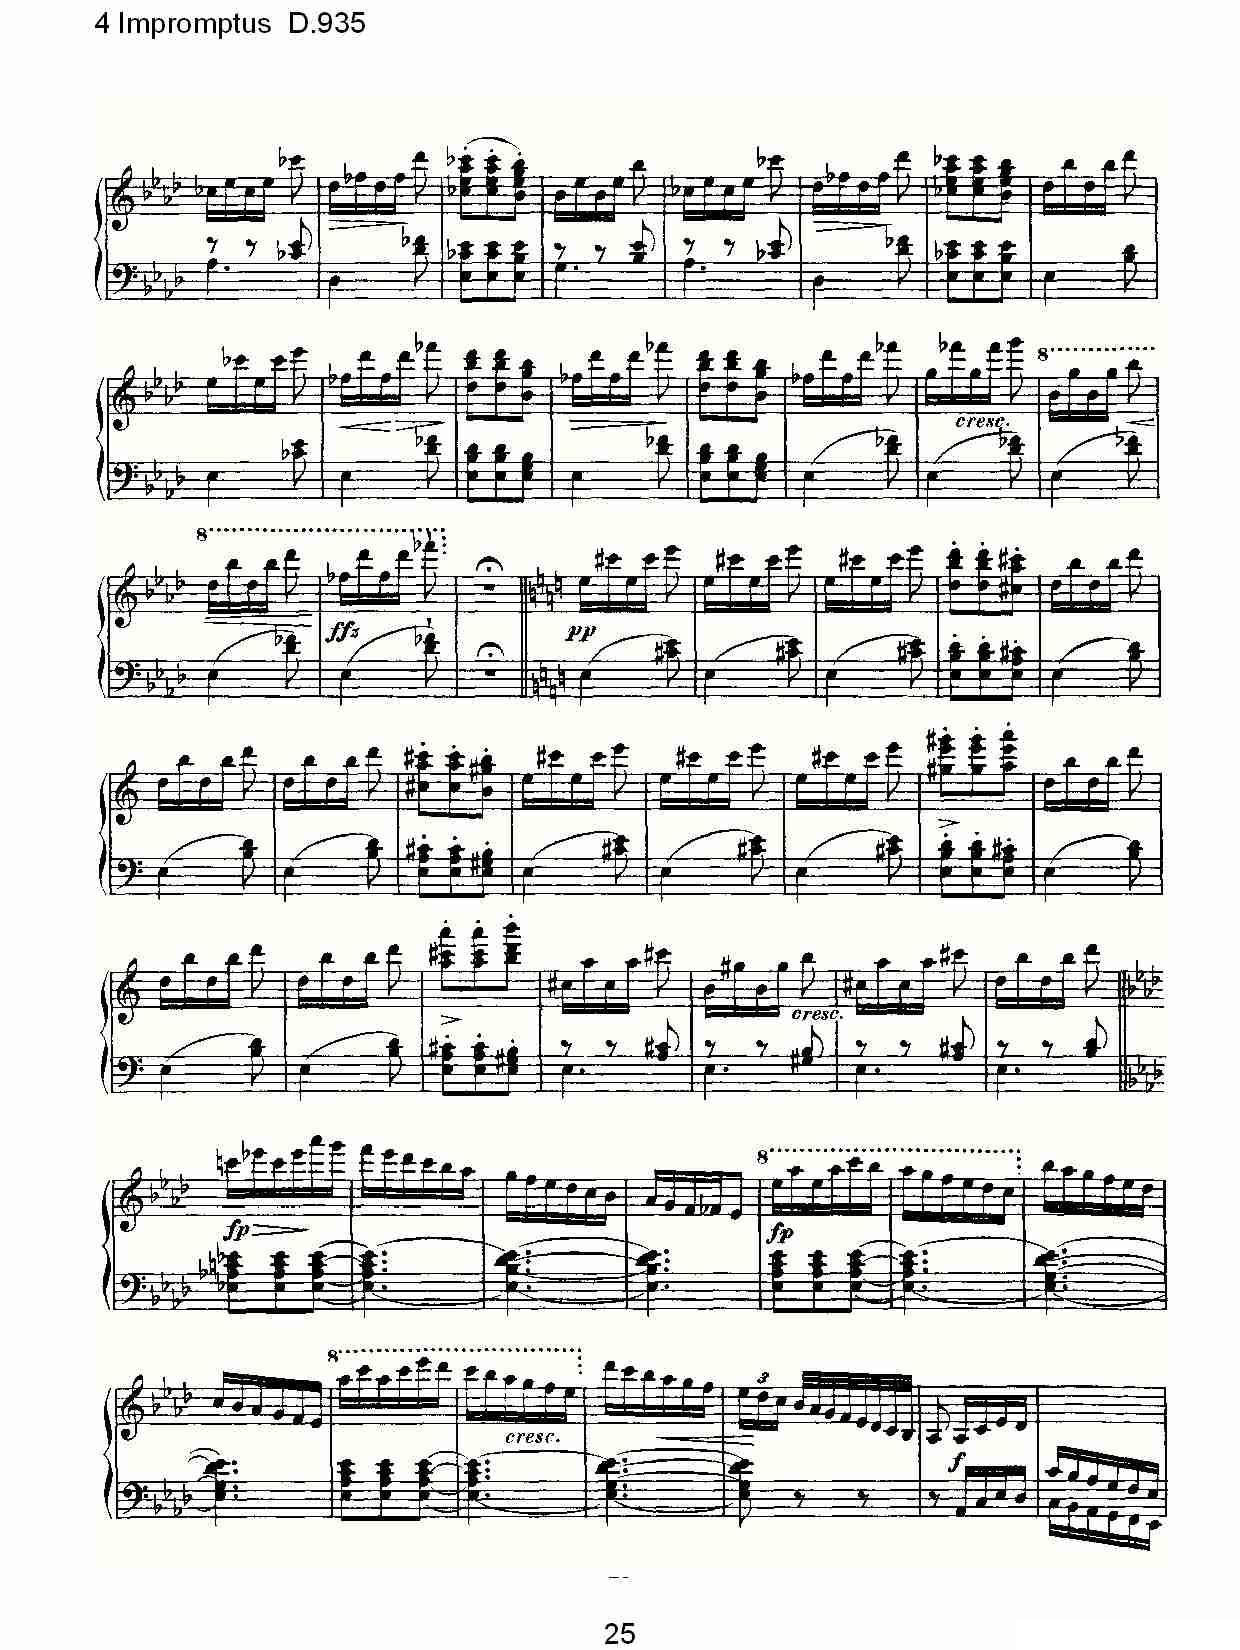 4 Impromptus D.935（4人即兴演奏D.935）钢琴曲谱（图25）